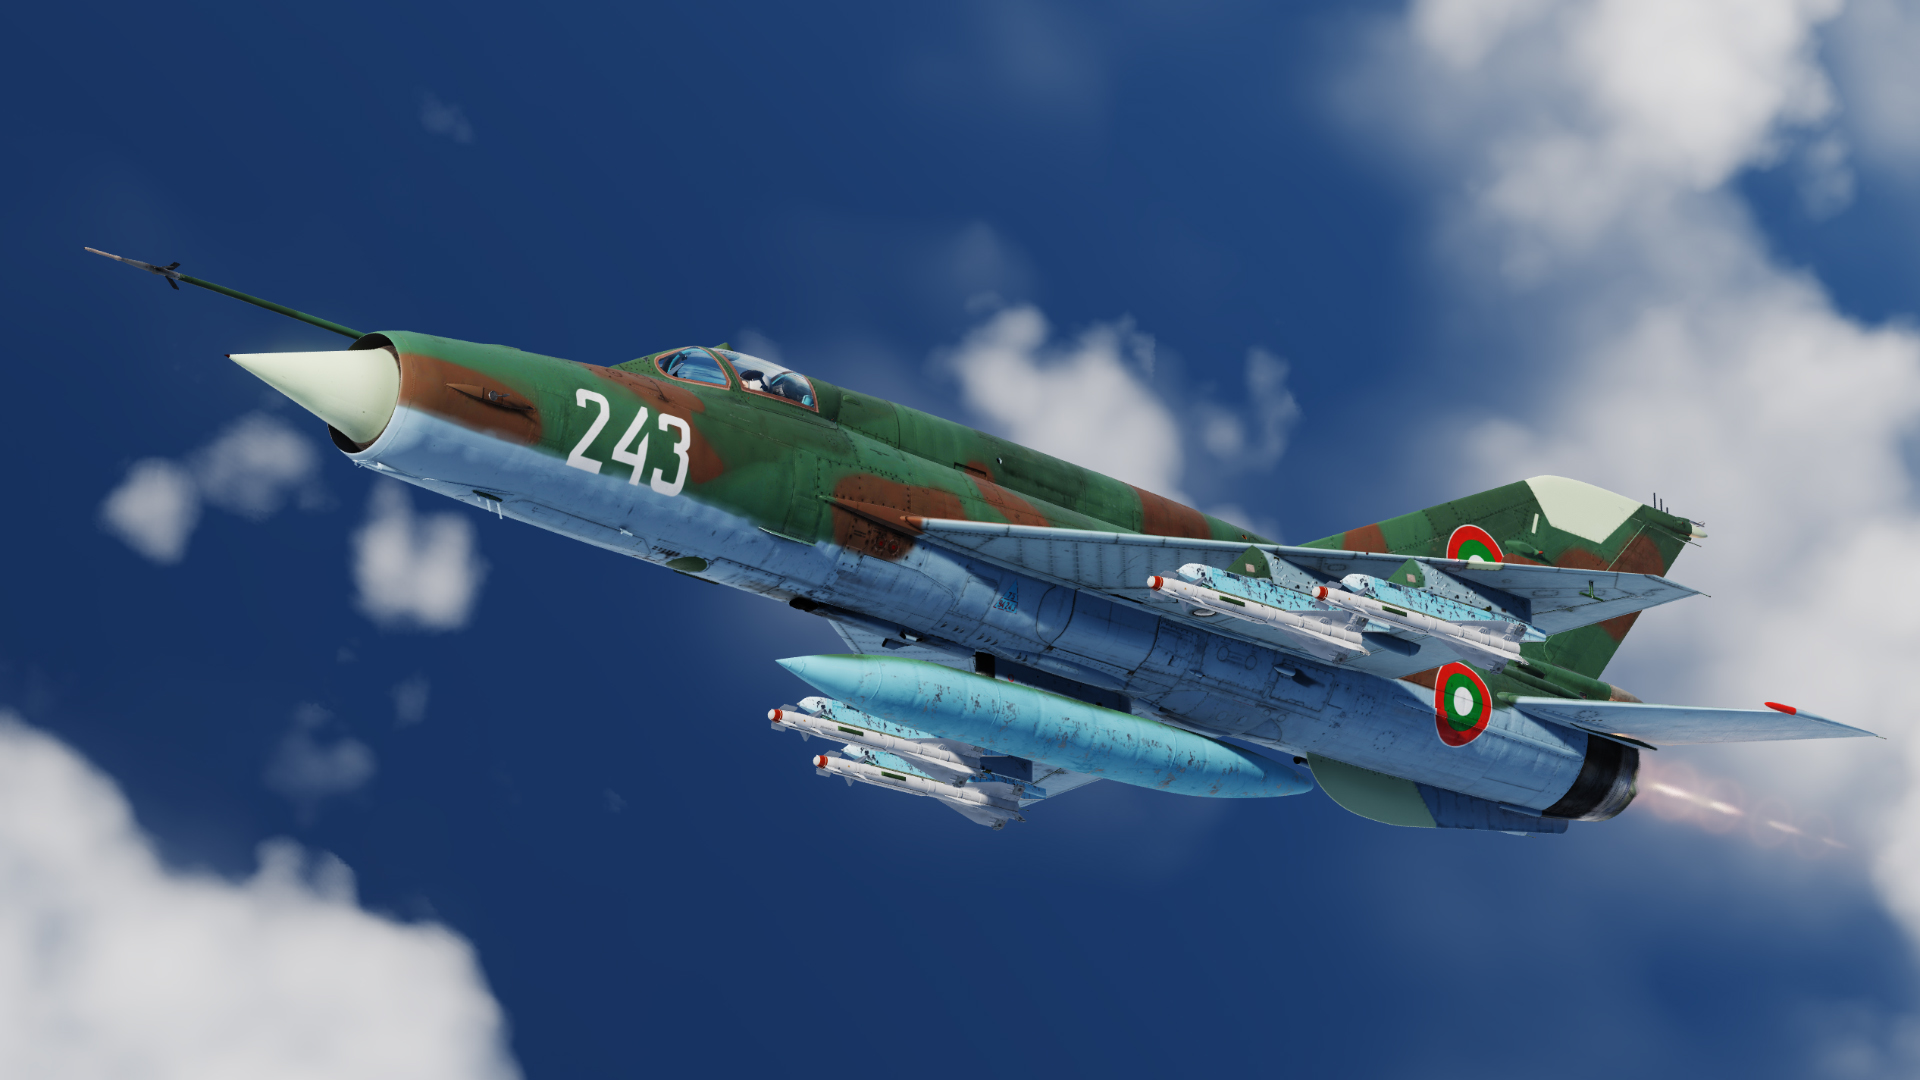 Bulgarian Air Force 243